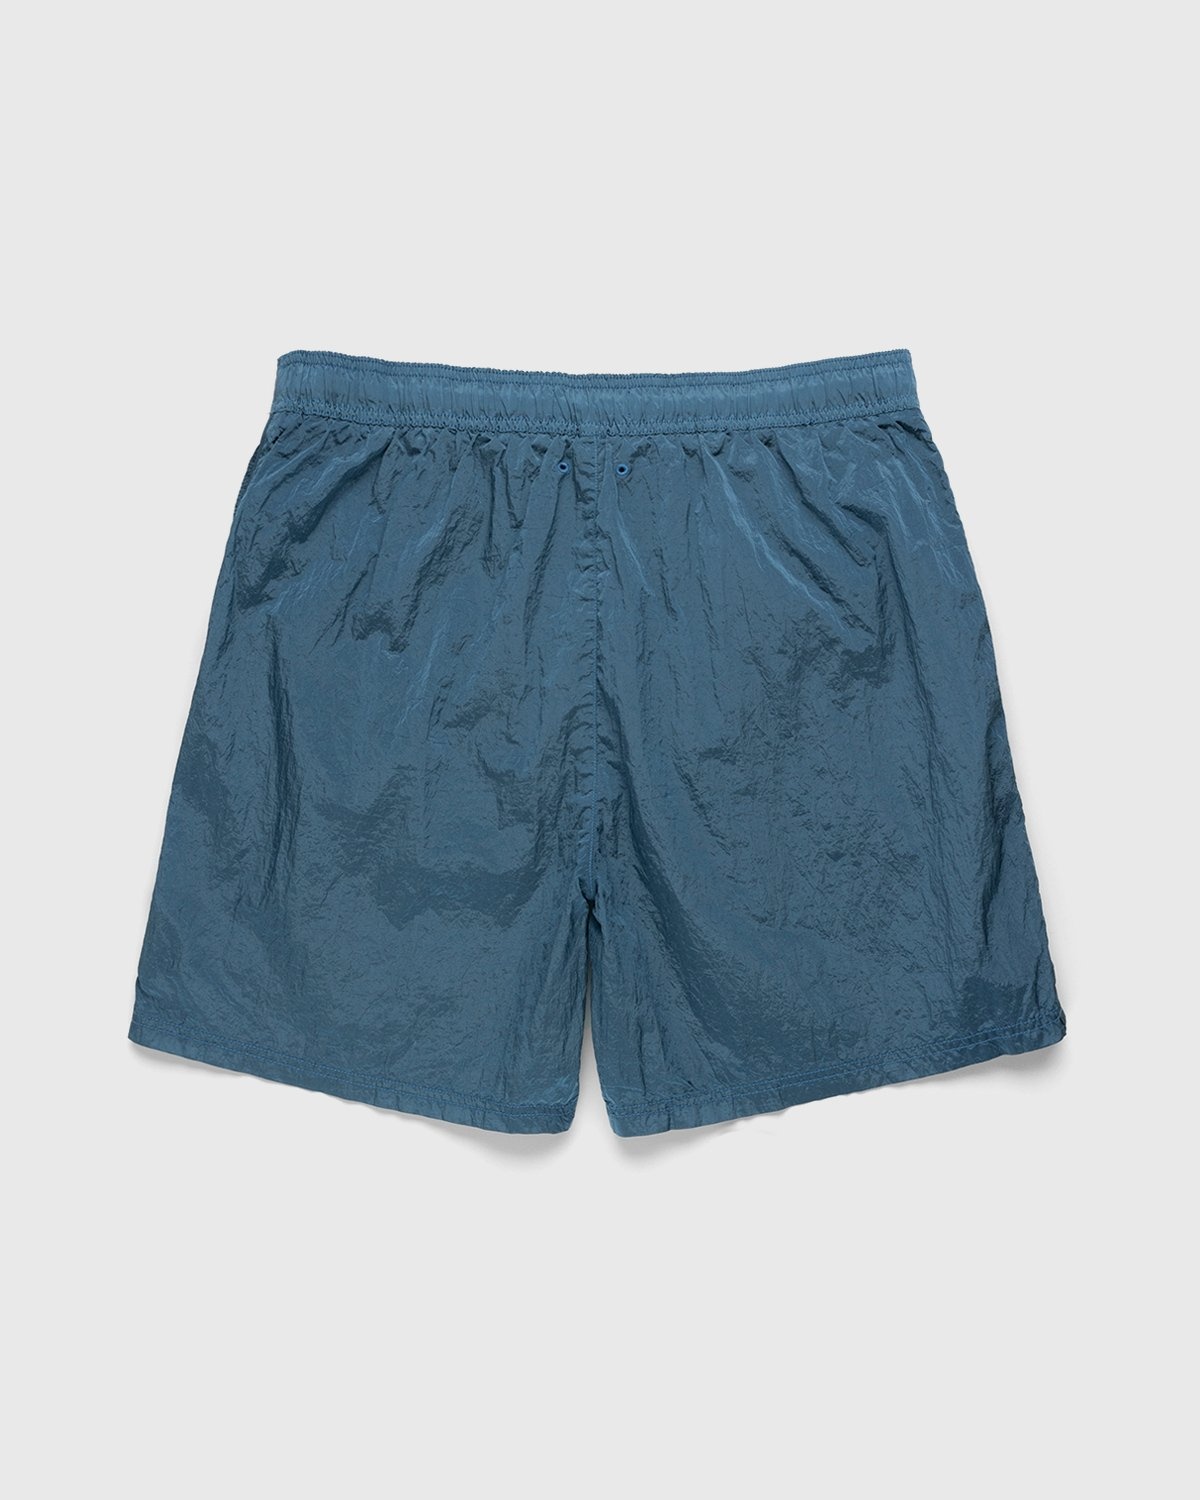 Stone Island – B0243 Nylon Metal Swim Shorts Mid Blue - Shorts - Blue - Image 2